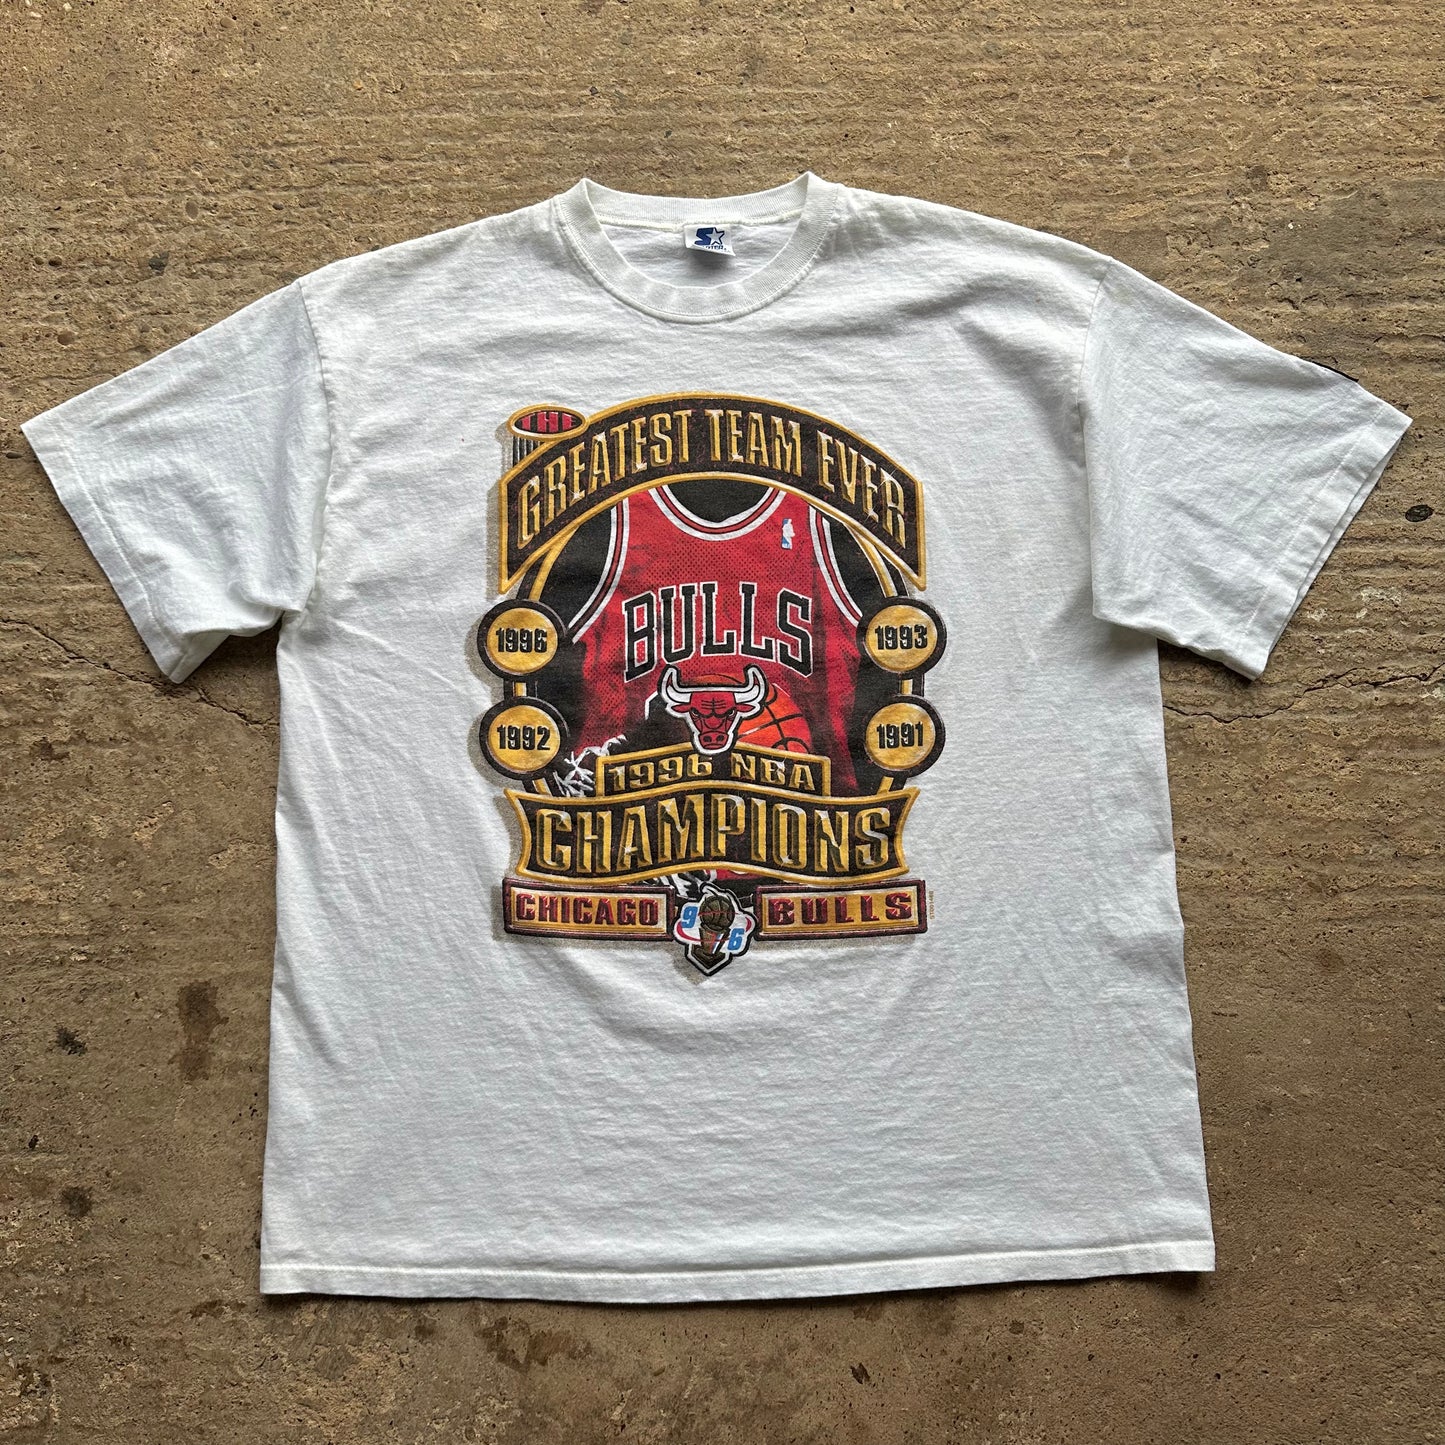 Chicago Bulls - 'Greatest Team Ever' - 1996 - XL